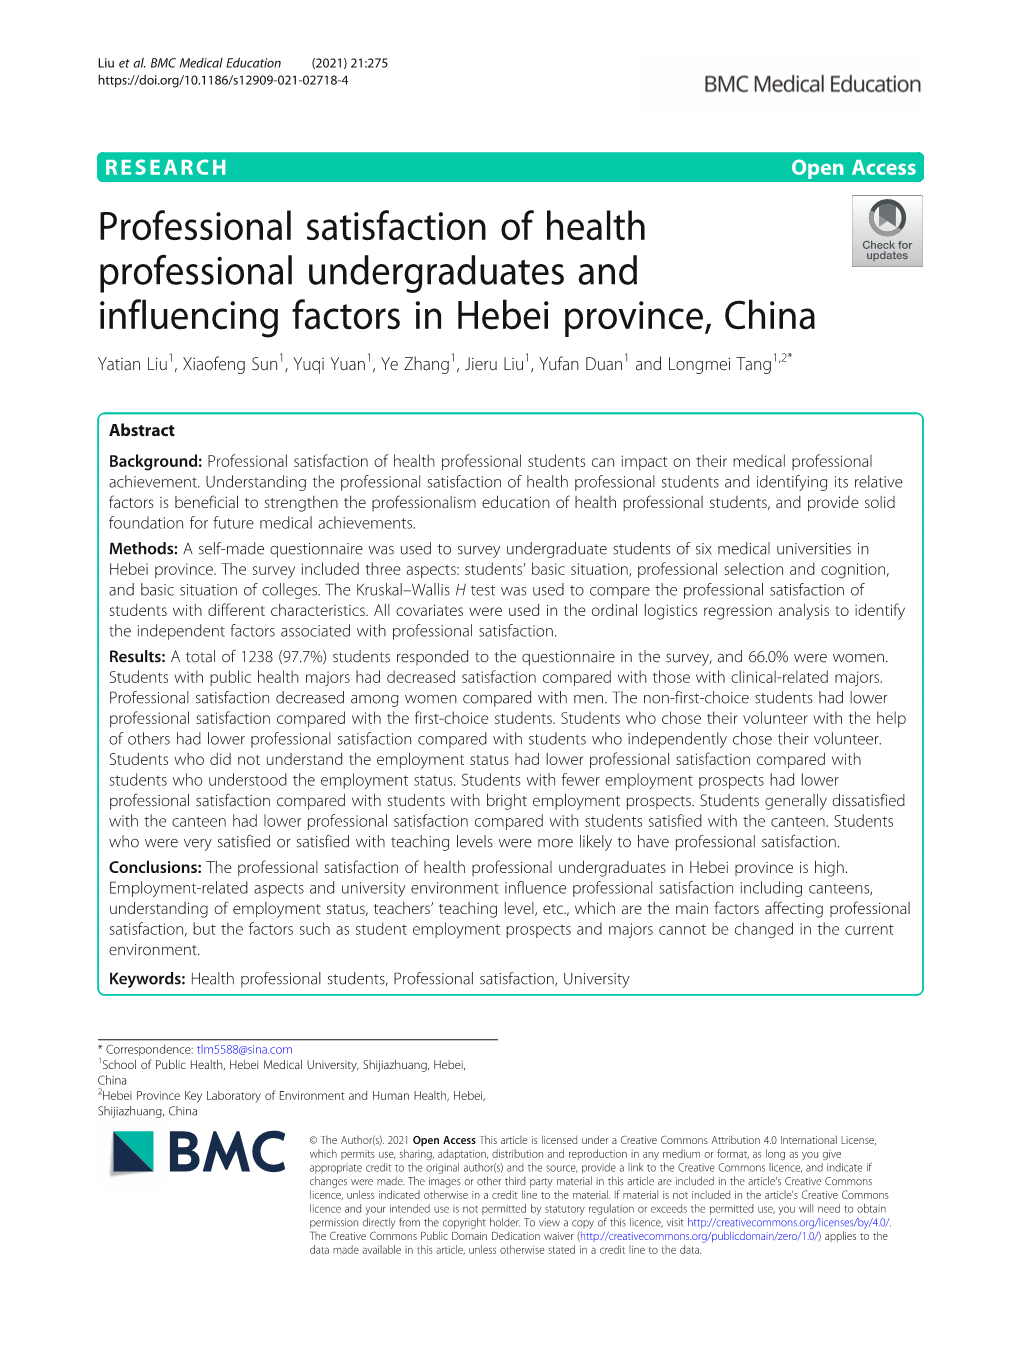 Professional Satisfaction of Health Professional Undergraduates And